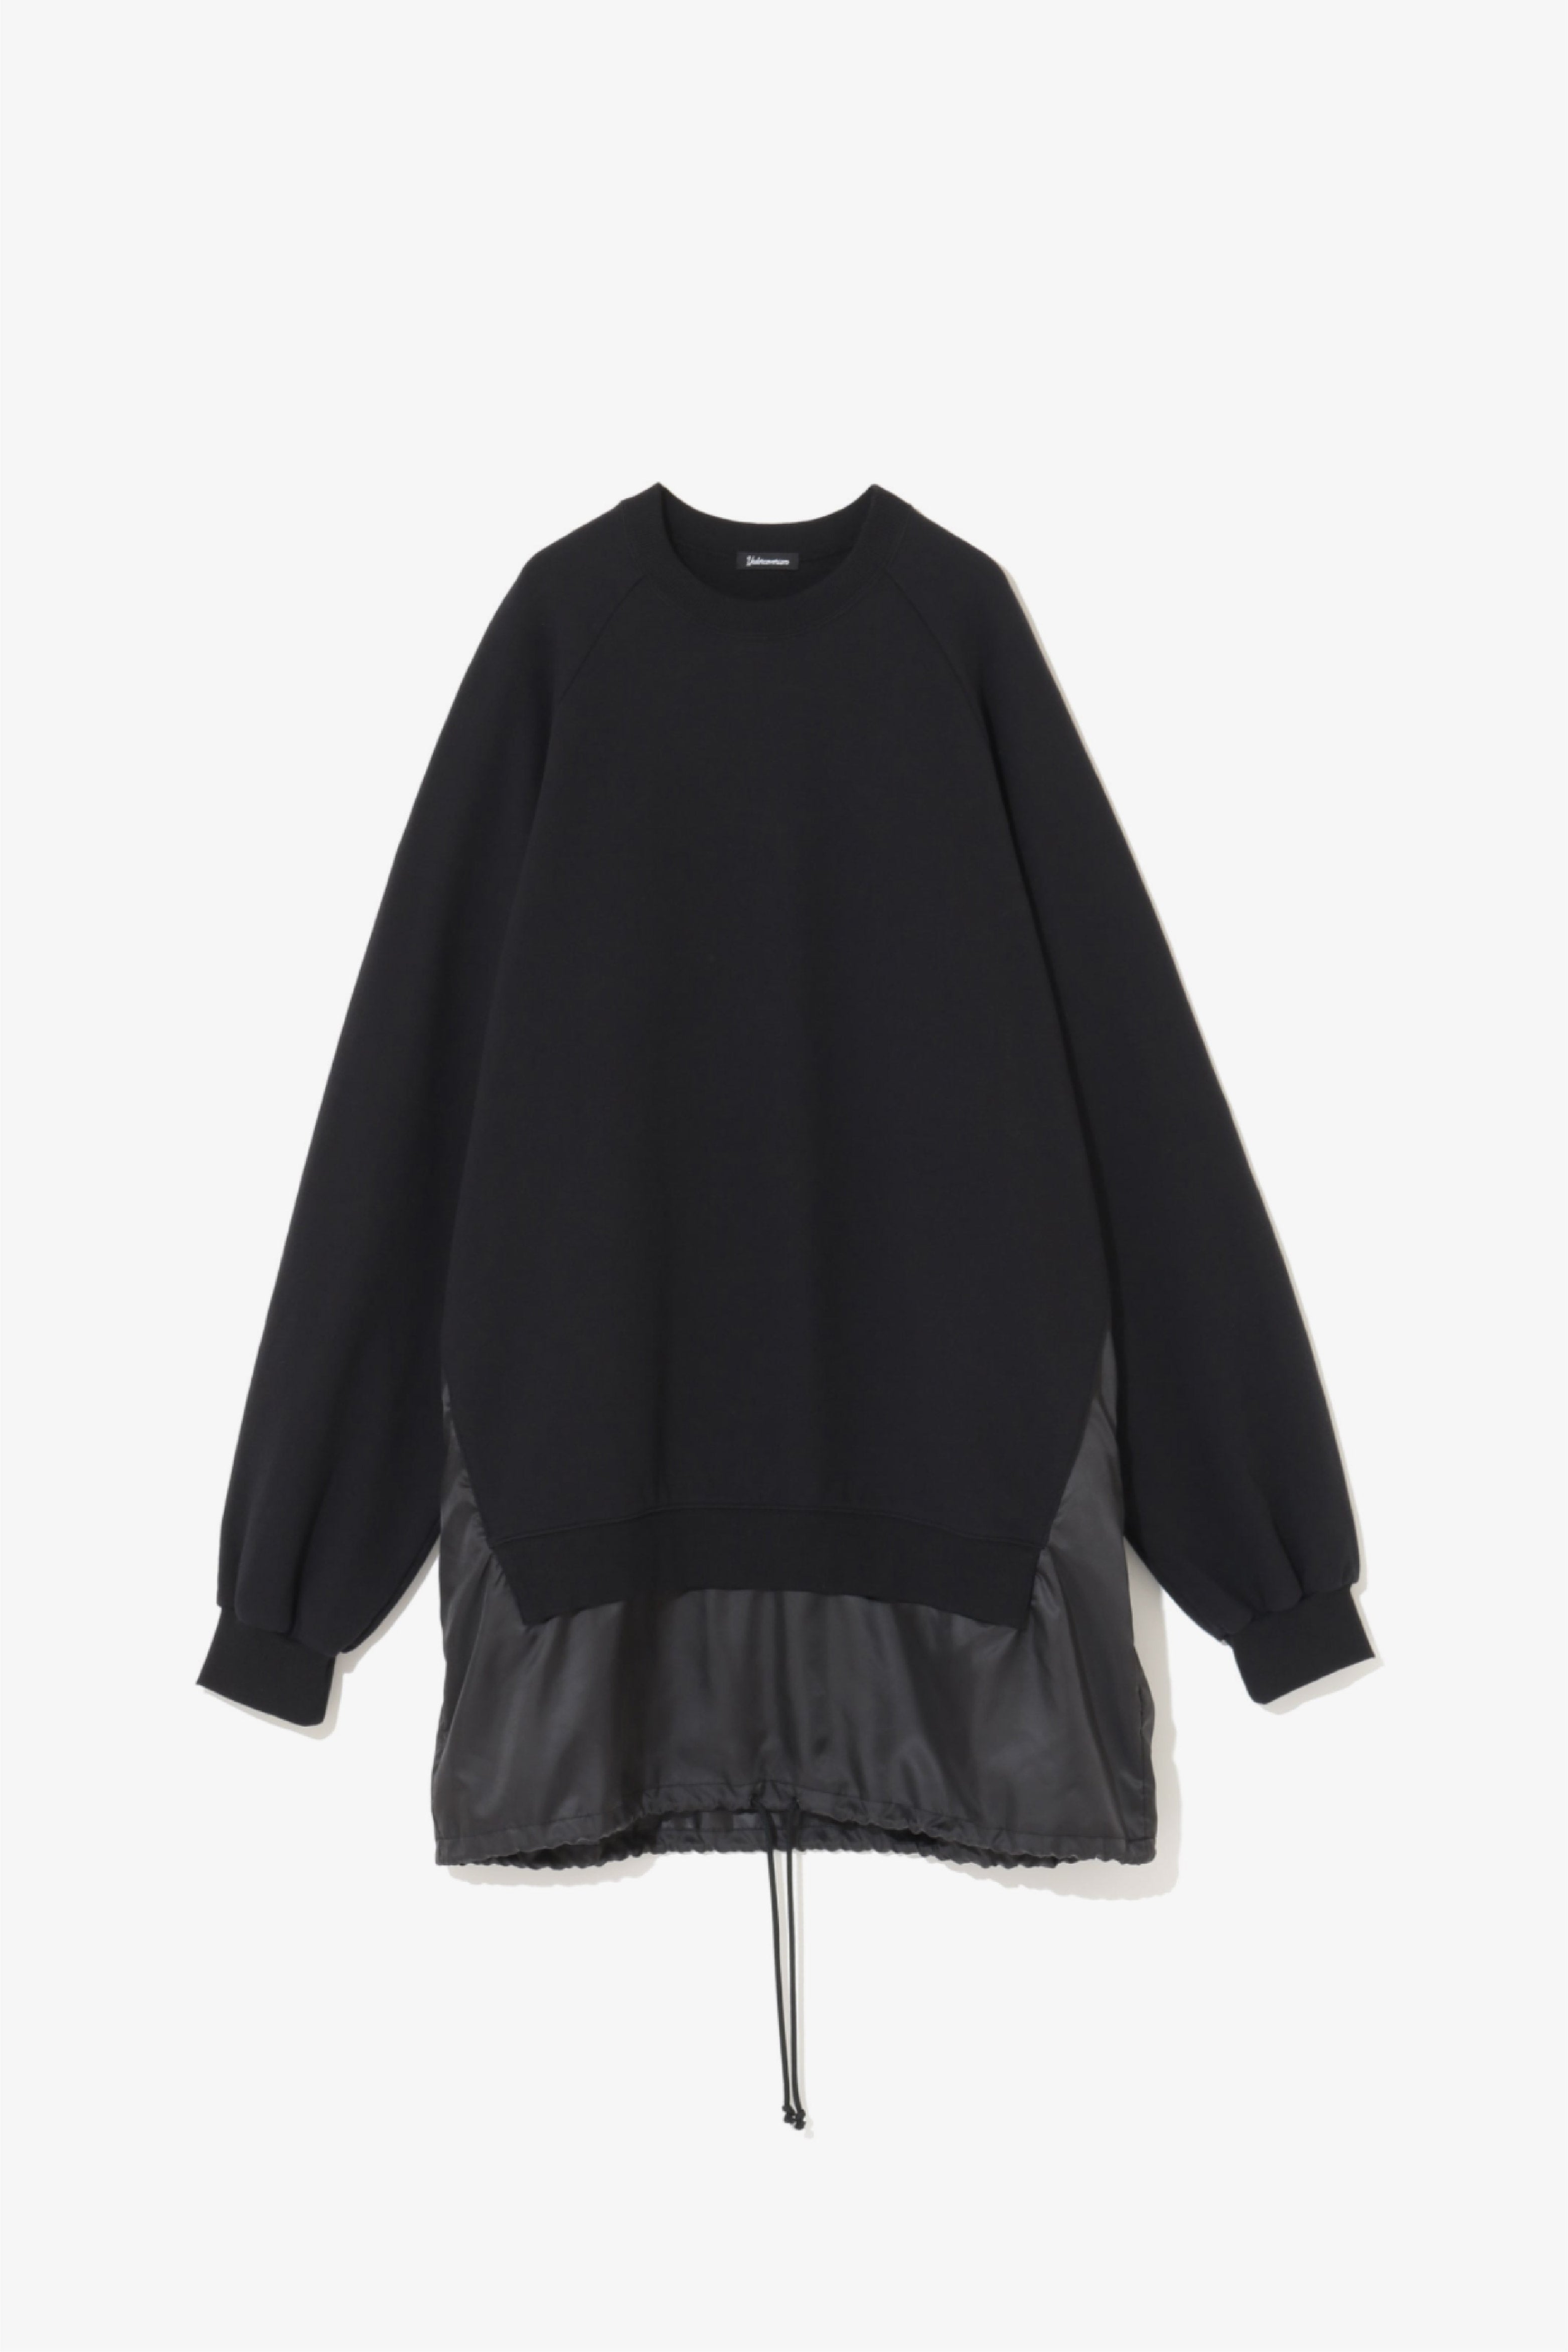 Selectshop FRAME - UNDERCOVERISM Layered Sweatshirt Sweats-knits Dubai